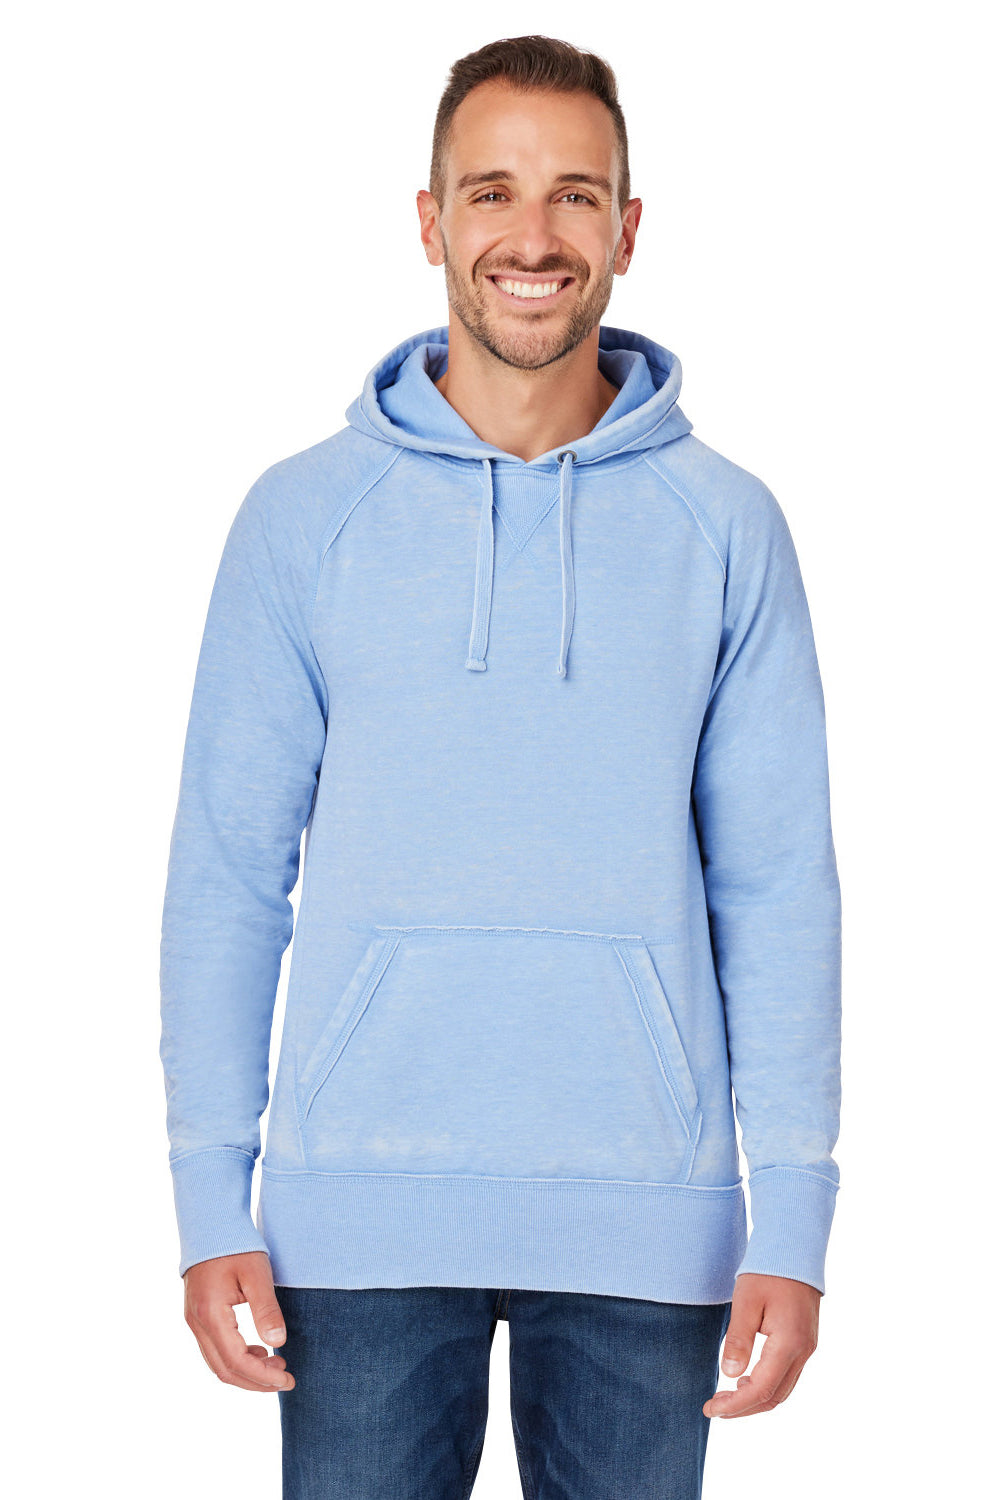 J America JA8915/8915 Mens Vintage Zen Burnout Fleece Hooded Sweatshirt Hoodie Chambray Blue Front